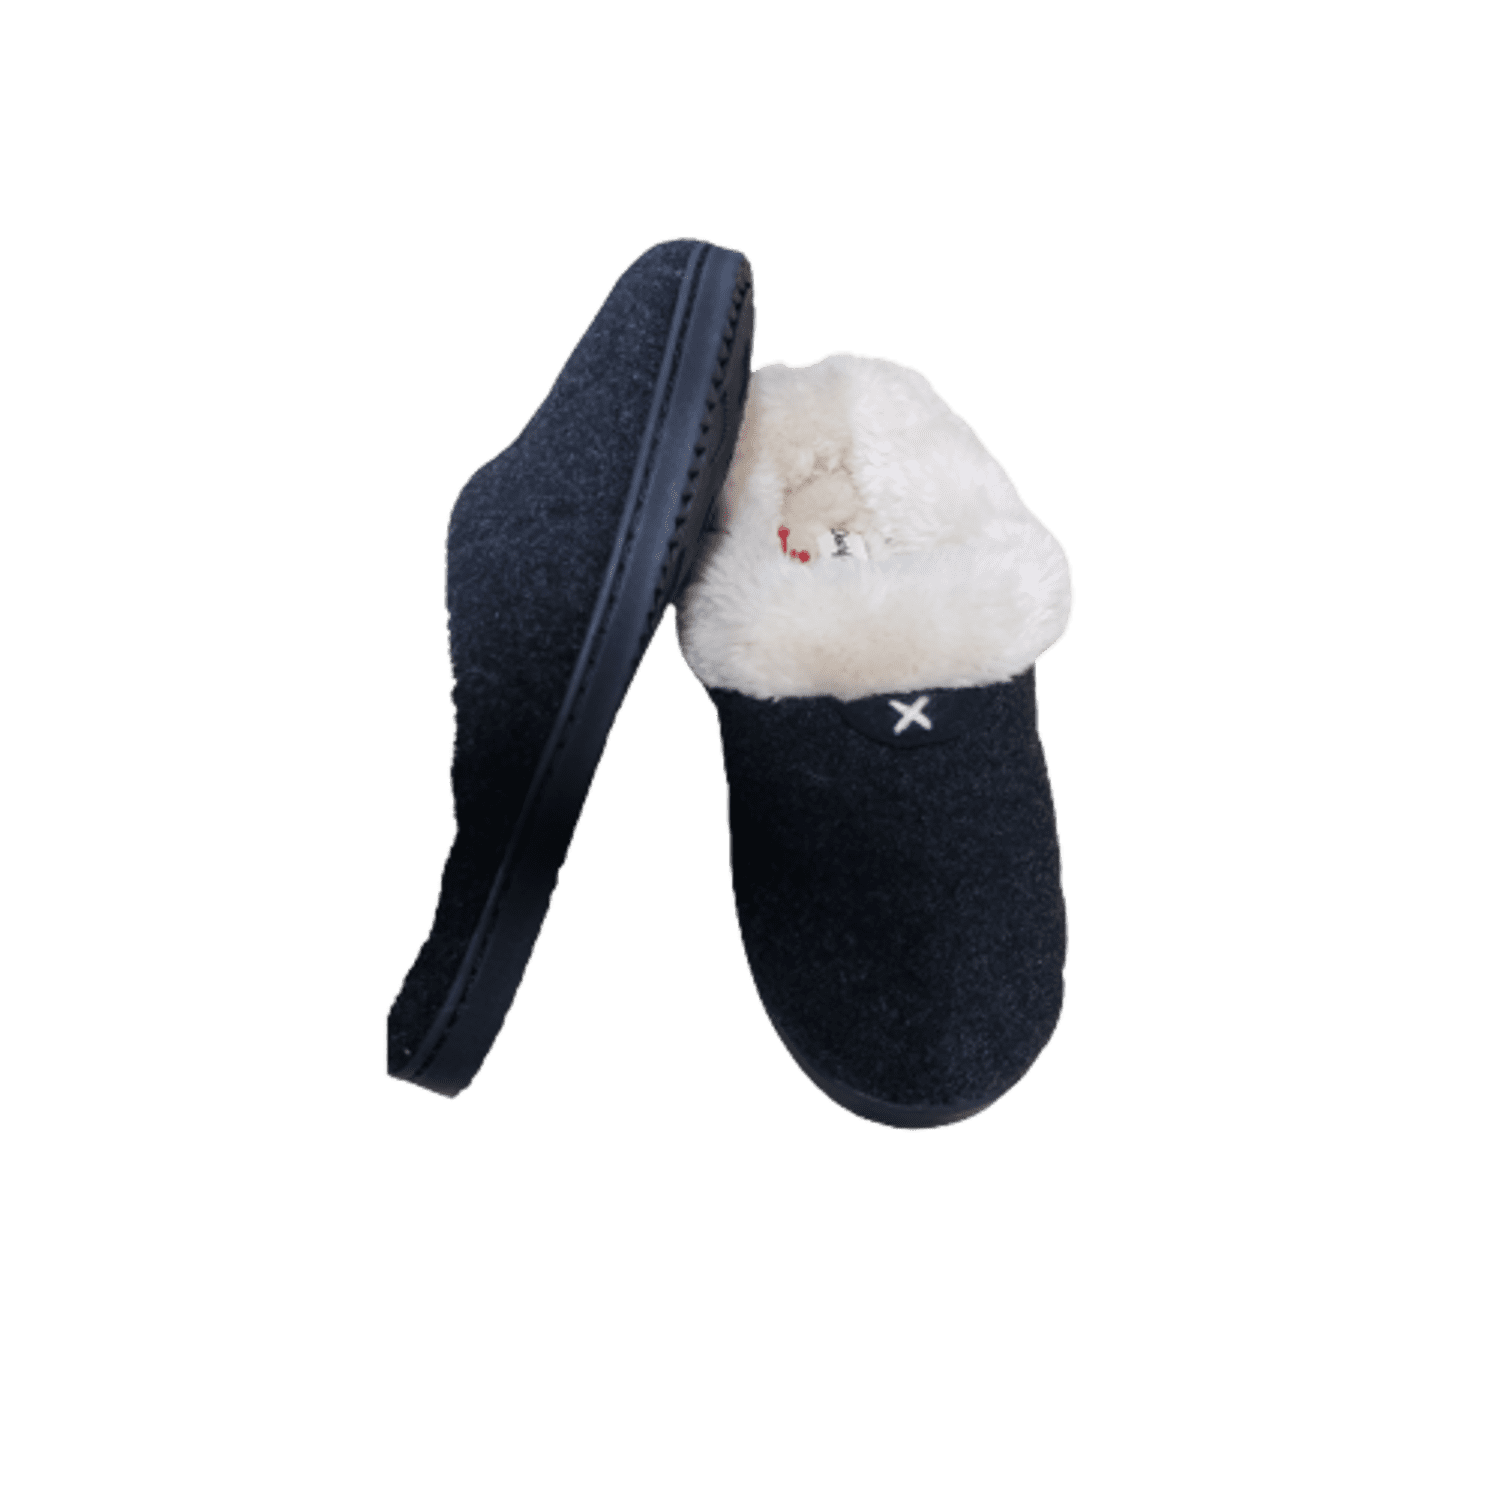 Charter Club plush velvet bootie slippers sz S 5-6 choose color NEW $28 